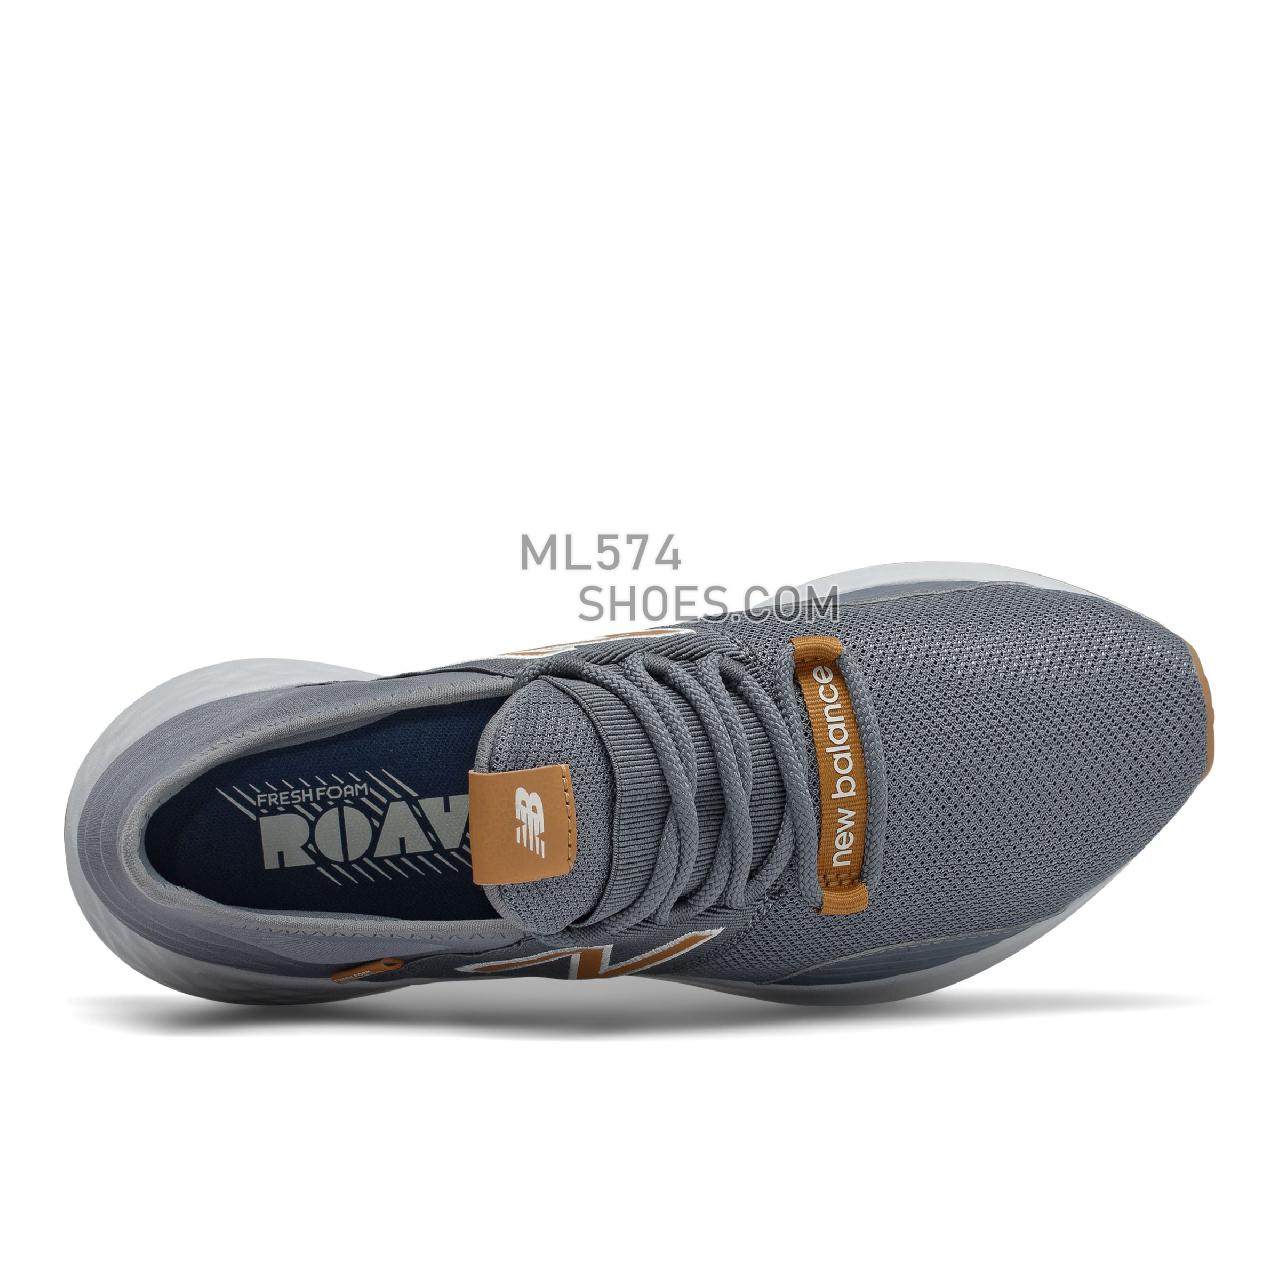 New Balance Fresh Foam Roav - Men's Neutral Running - Lead with Workwear and Angora - MROAVBG